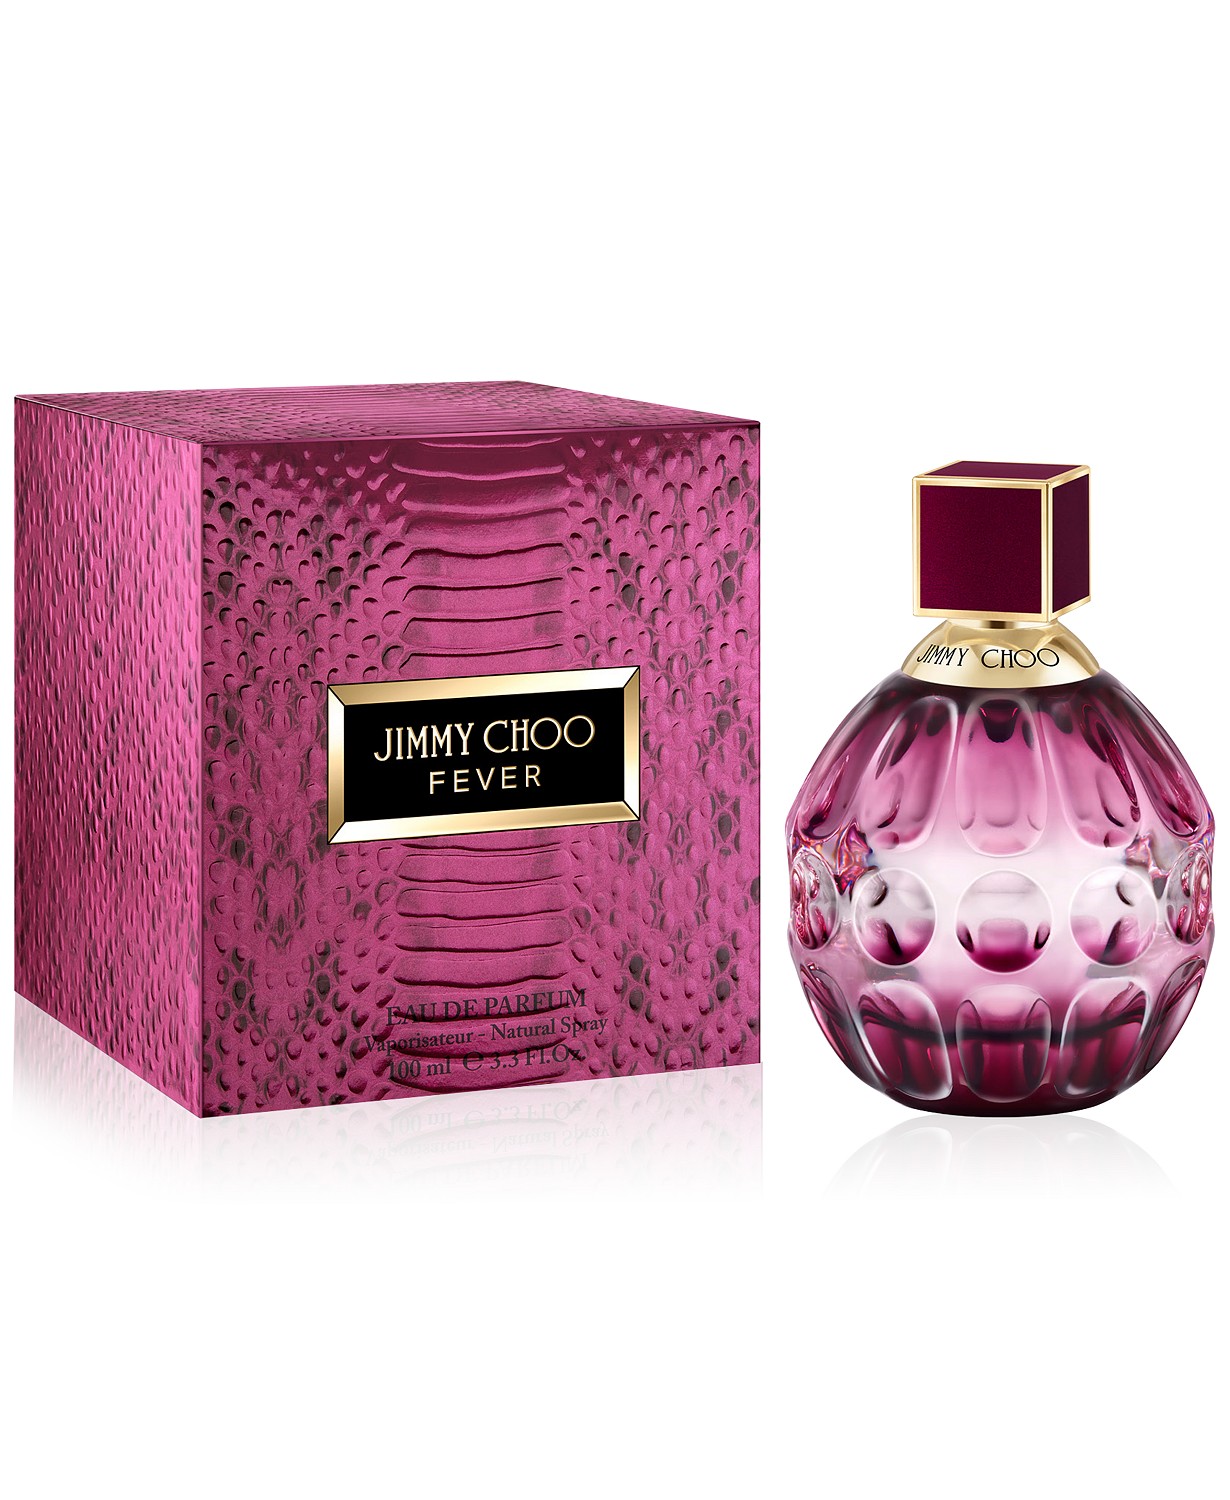 Jimmy Choo Ladies Eau de Parfum Spray 3.3 oz 